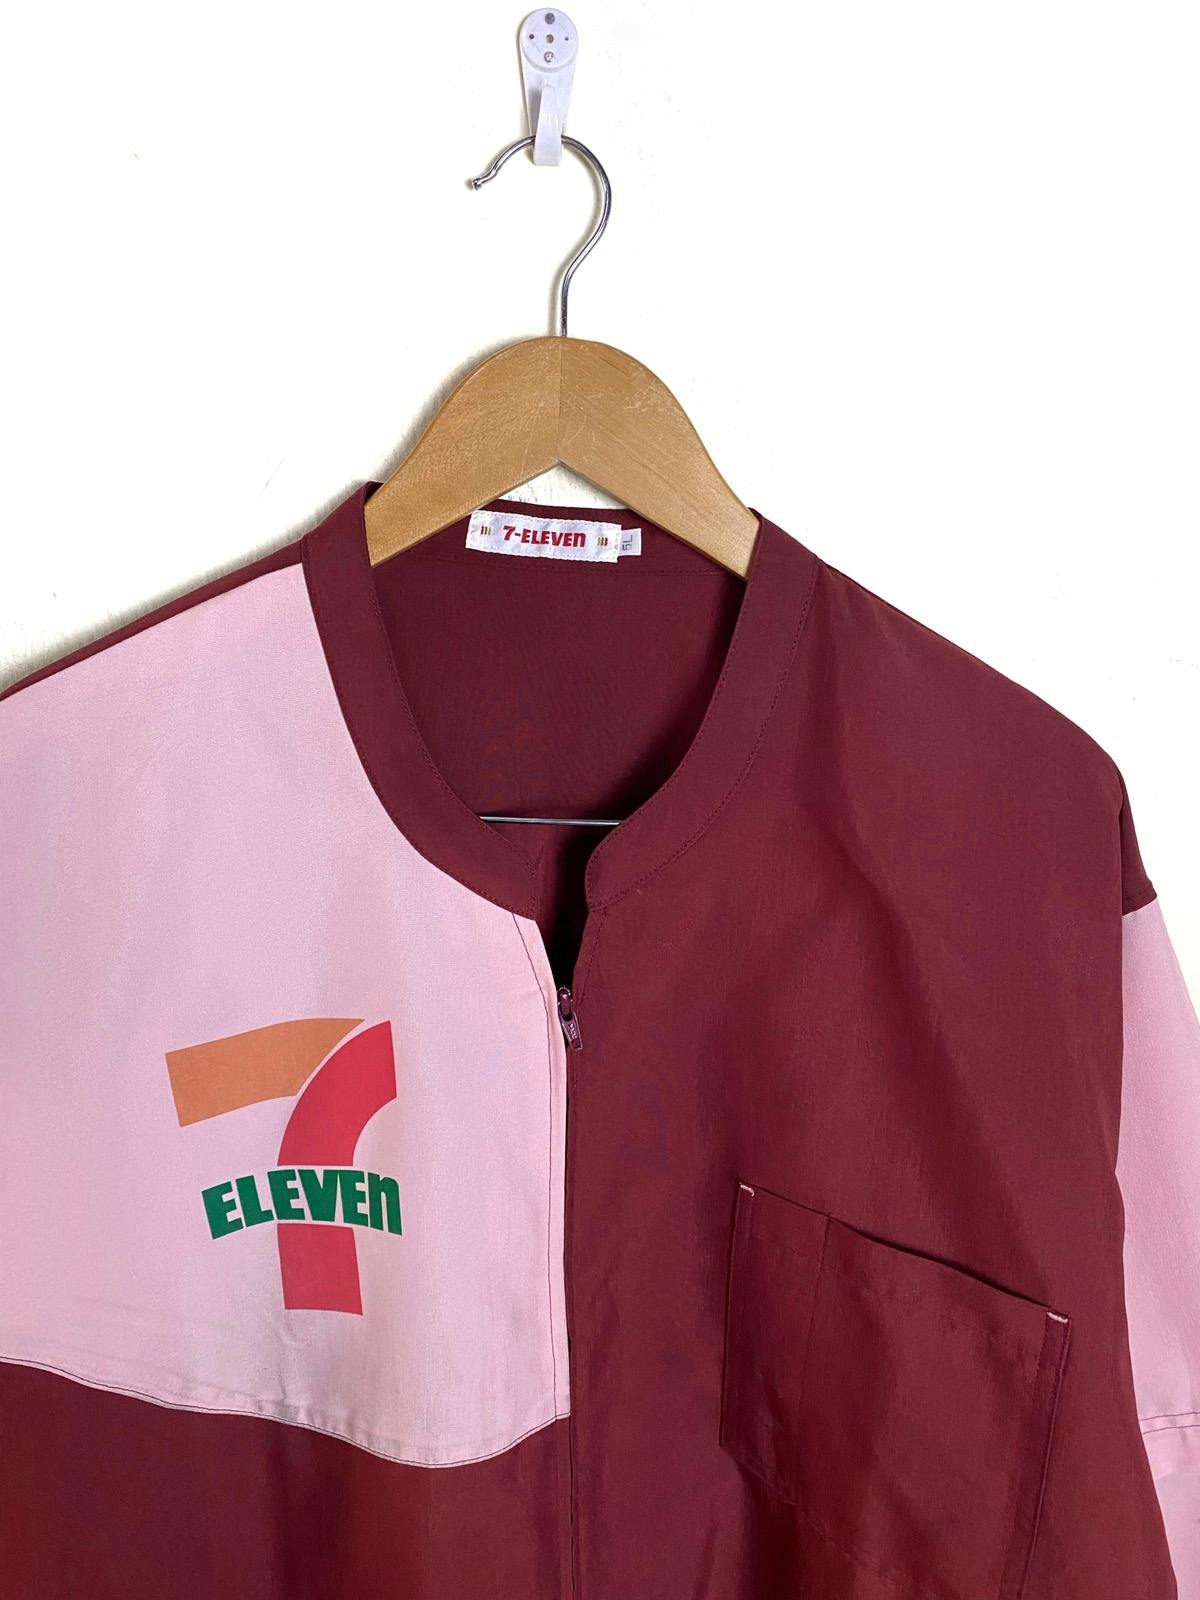 Vintage 90s 7-Eleven Uniform Workers Collection Shirt - 2